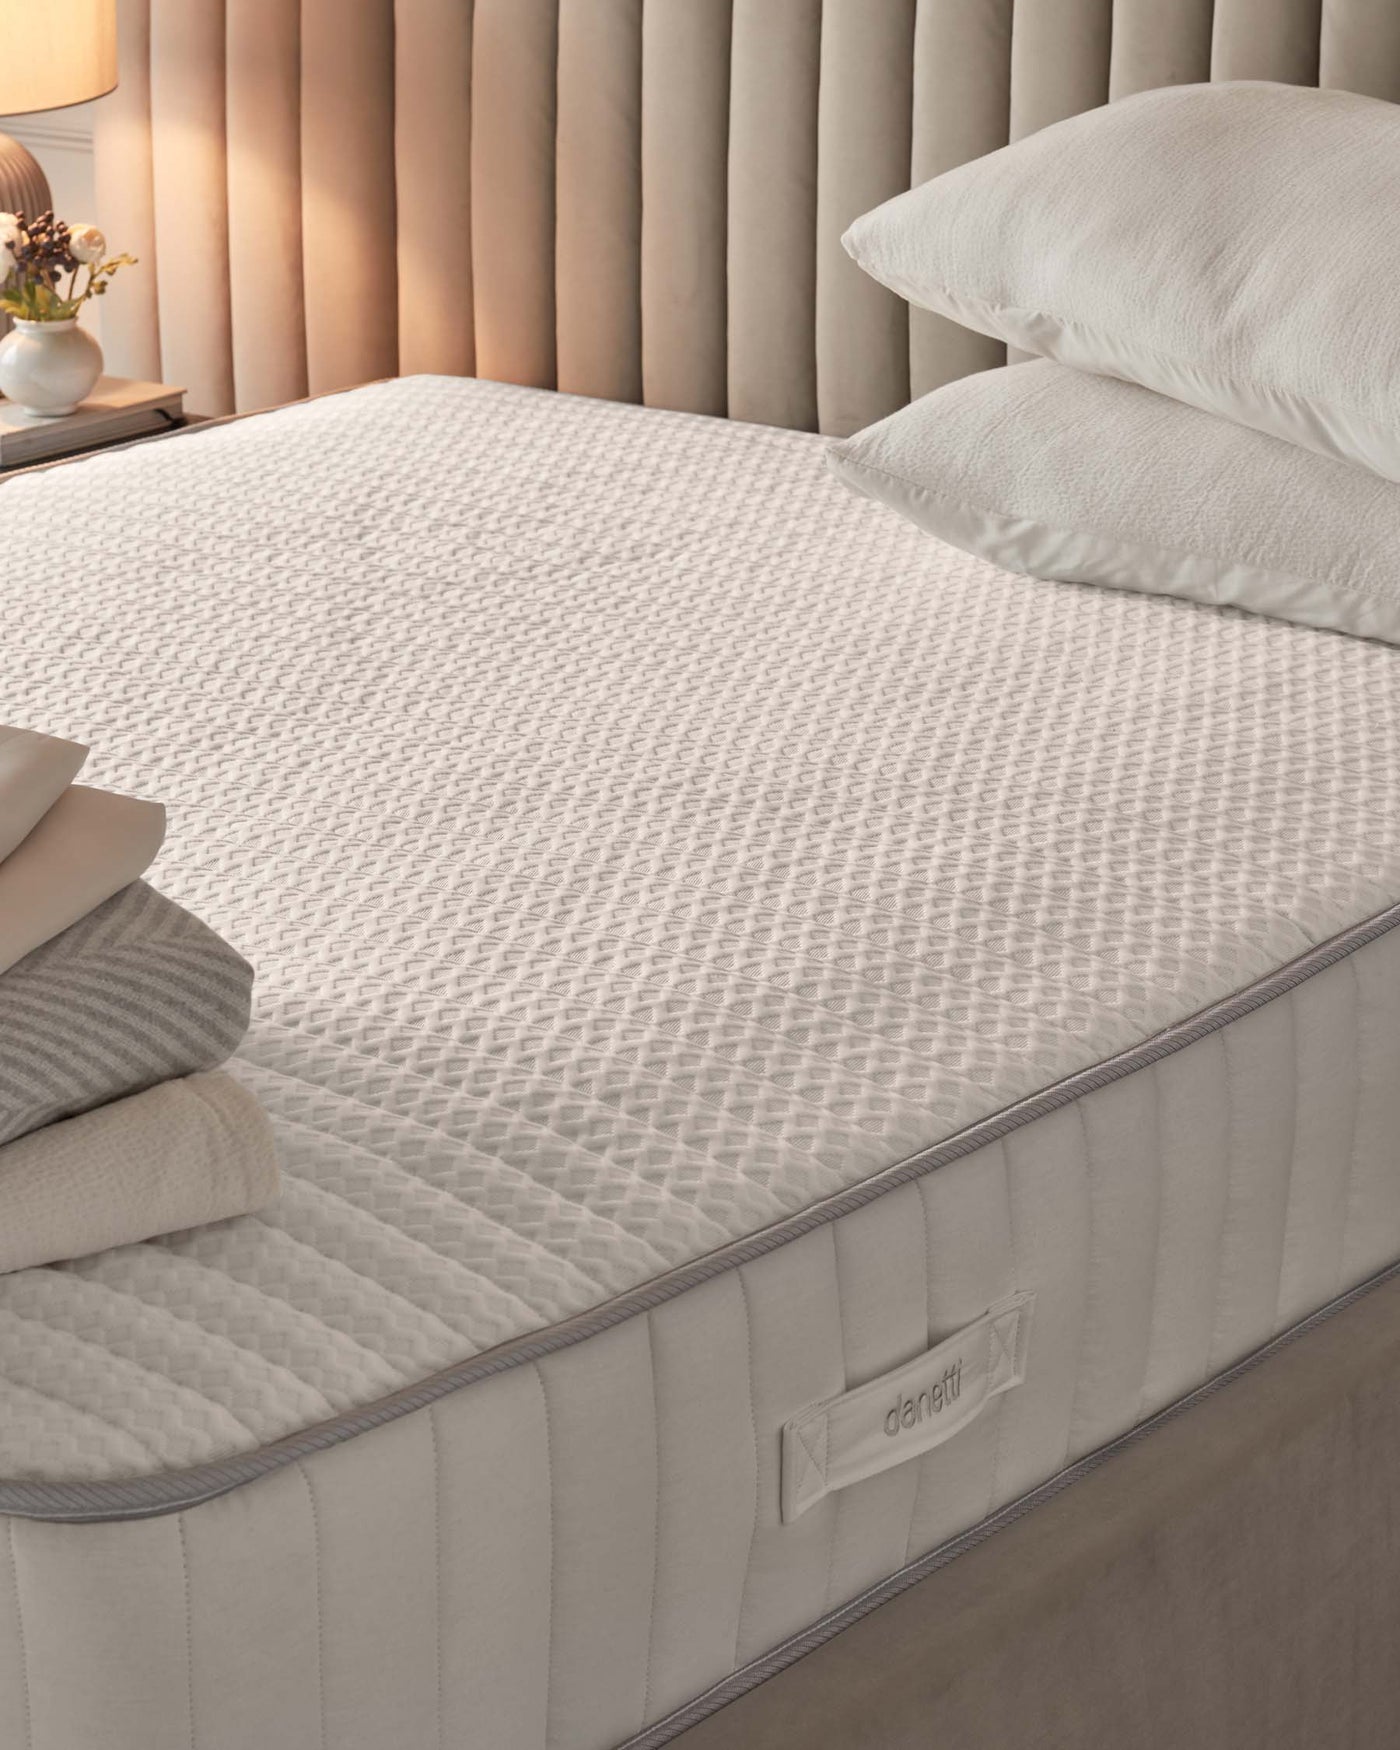 blissful comfort 1500 pocket spring mattress super king